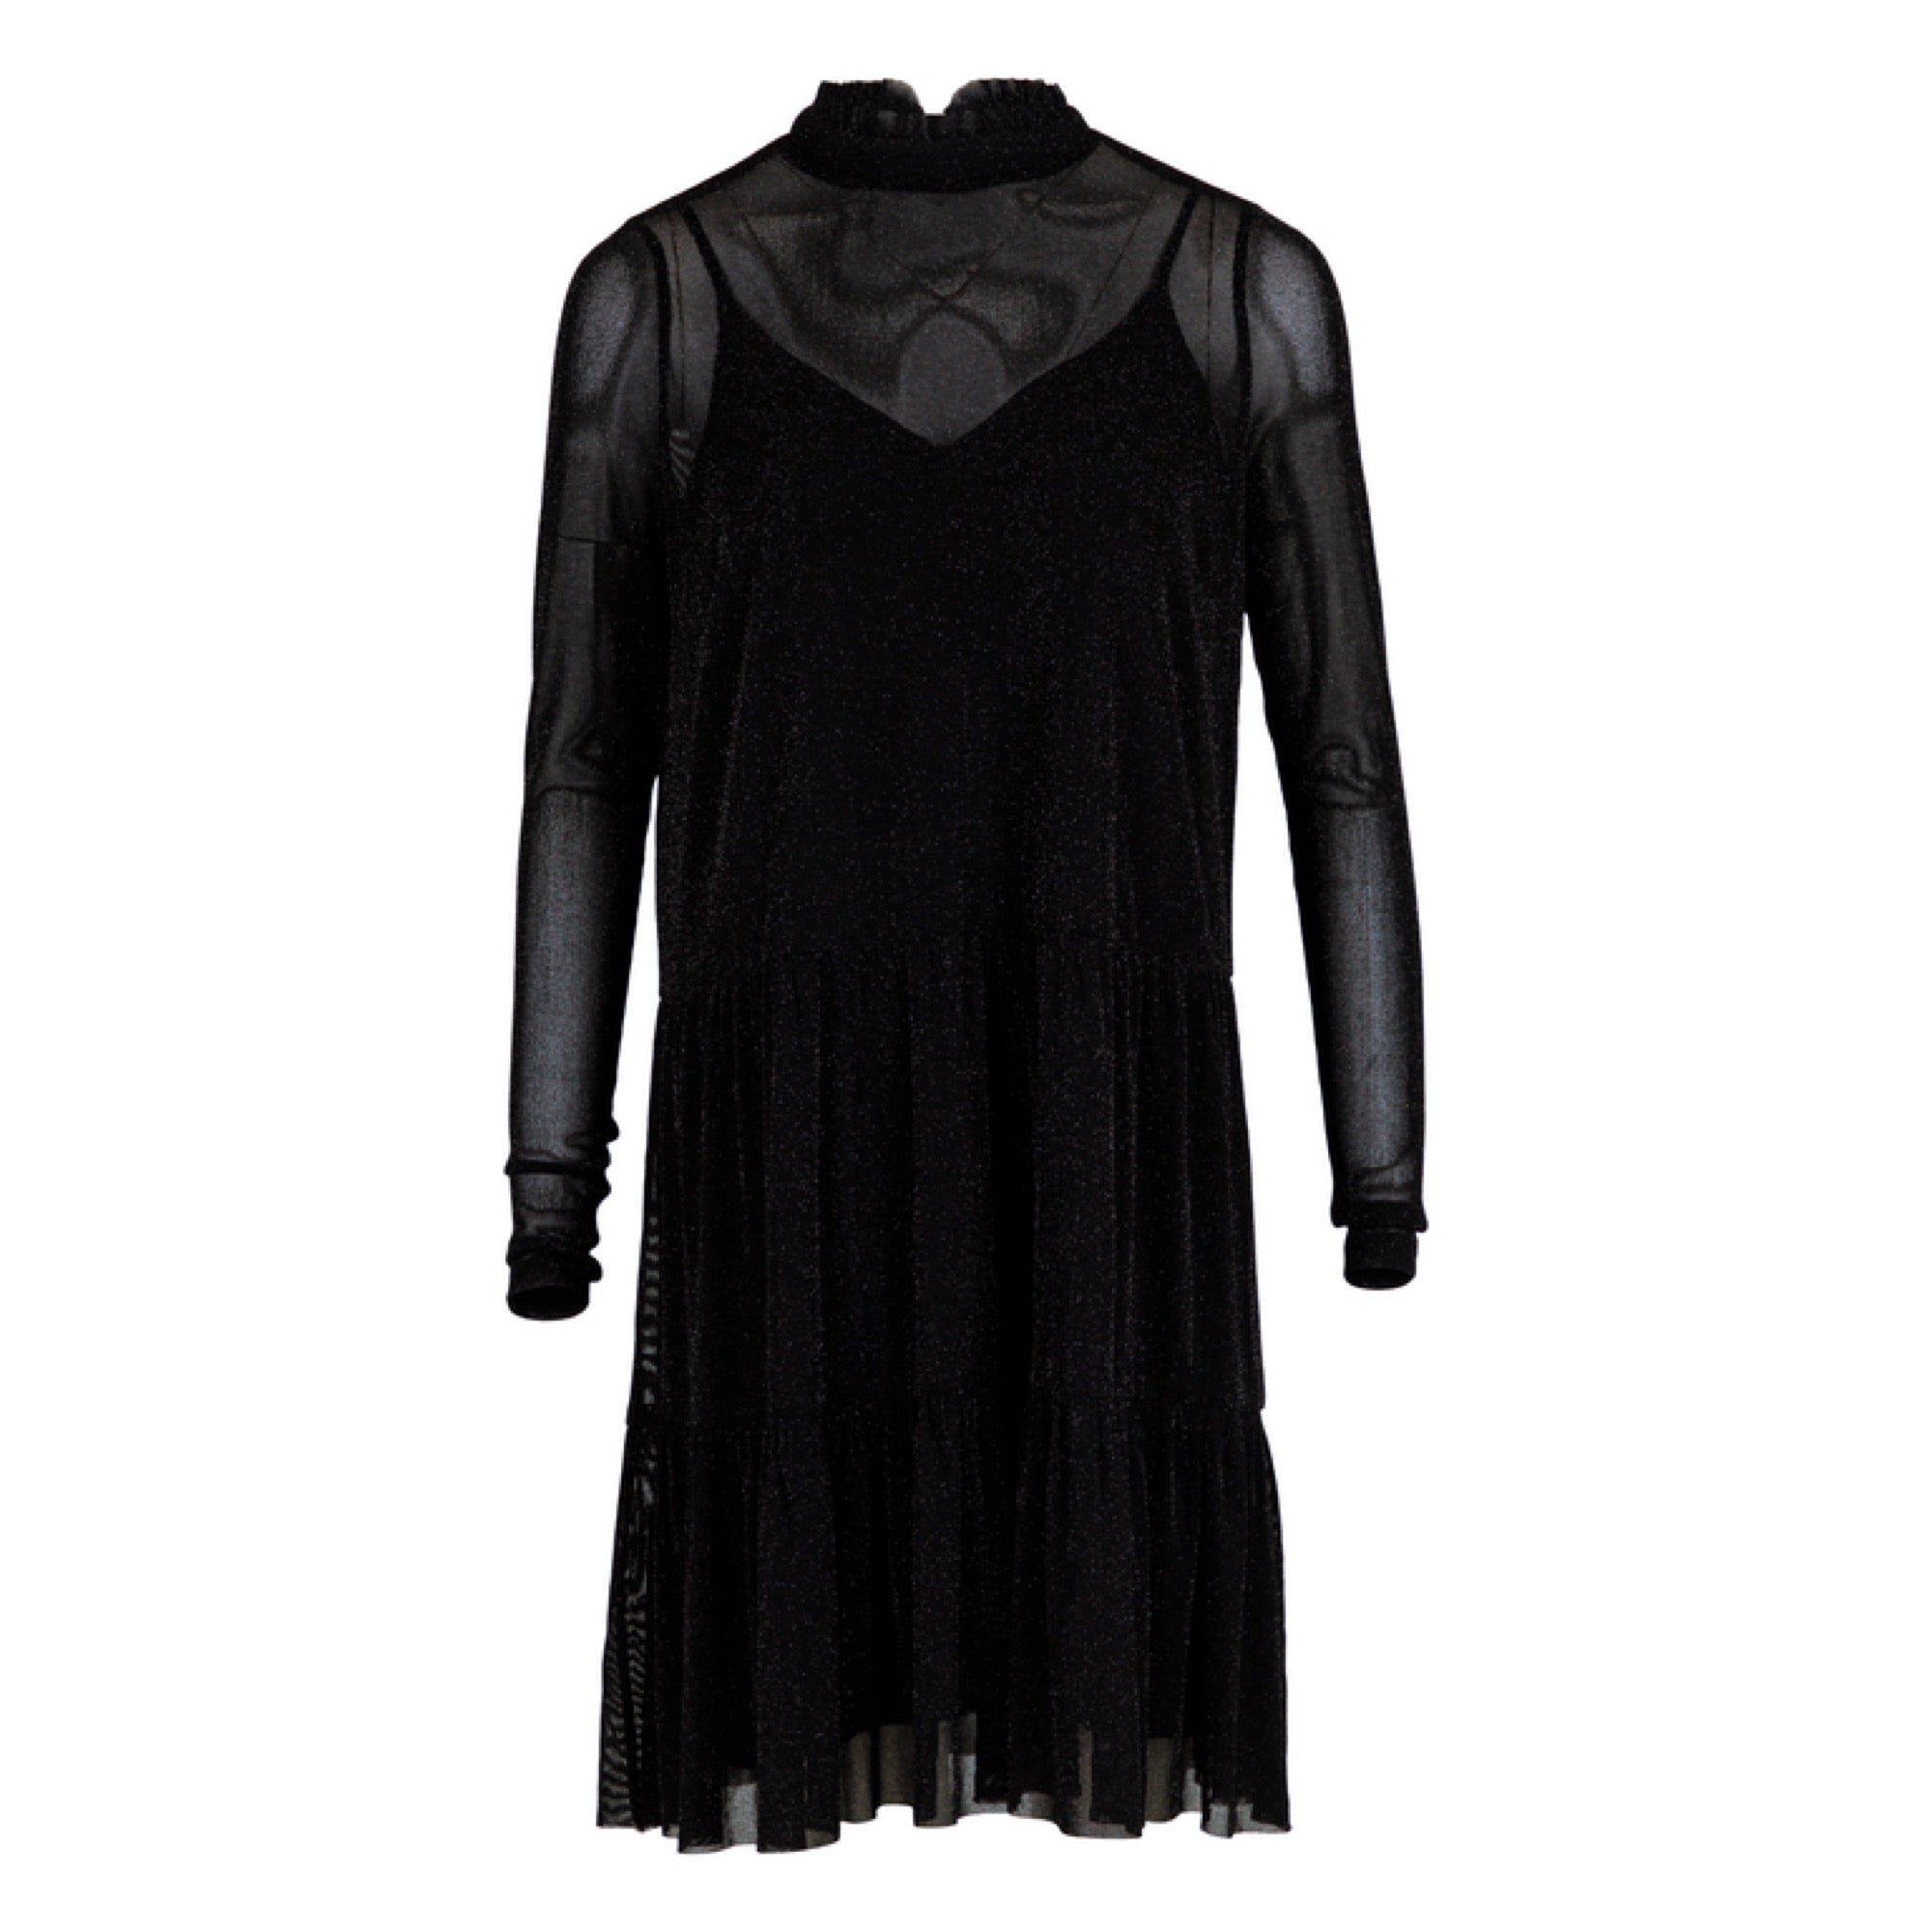 Kala Mesh Dress - Black - Neo Noir - Kjoler - VILLOID.no